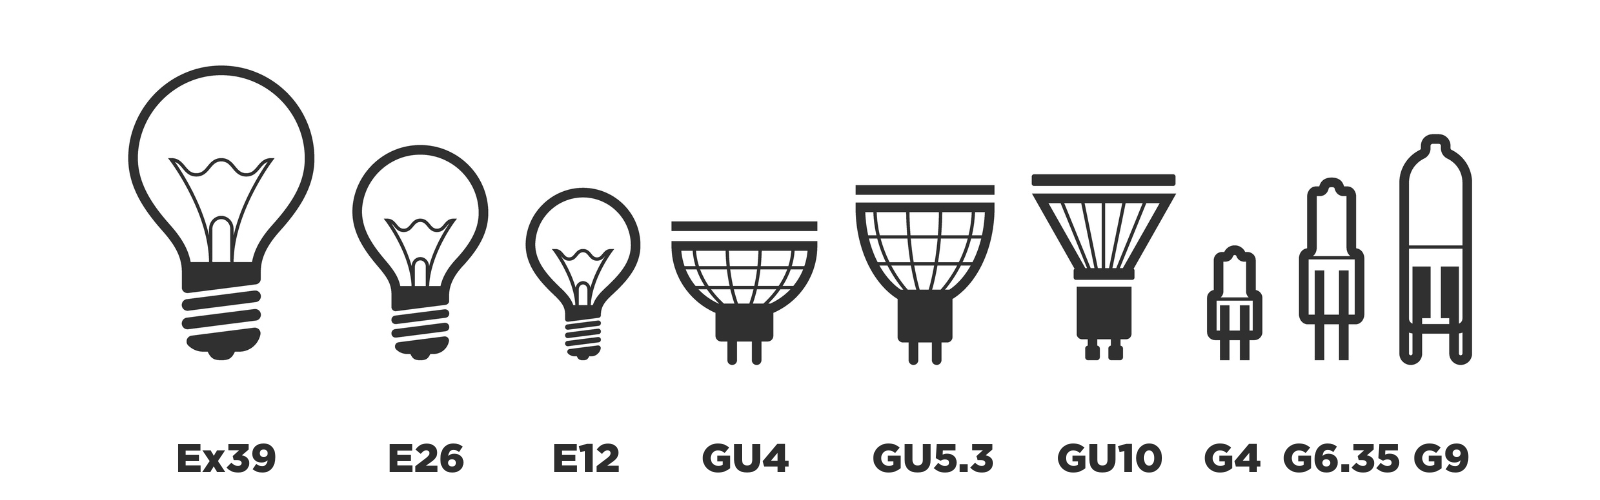 different types light bulb bases